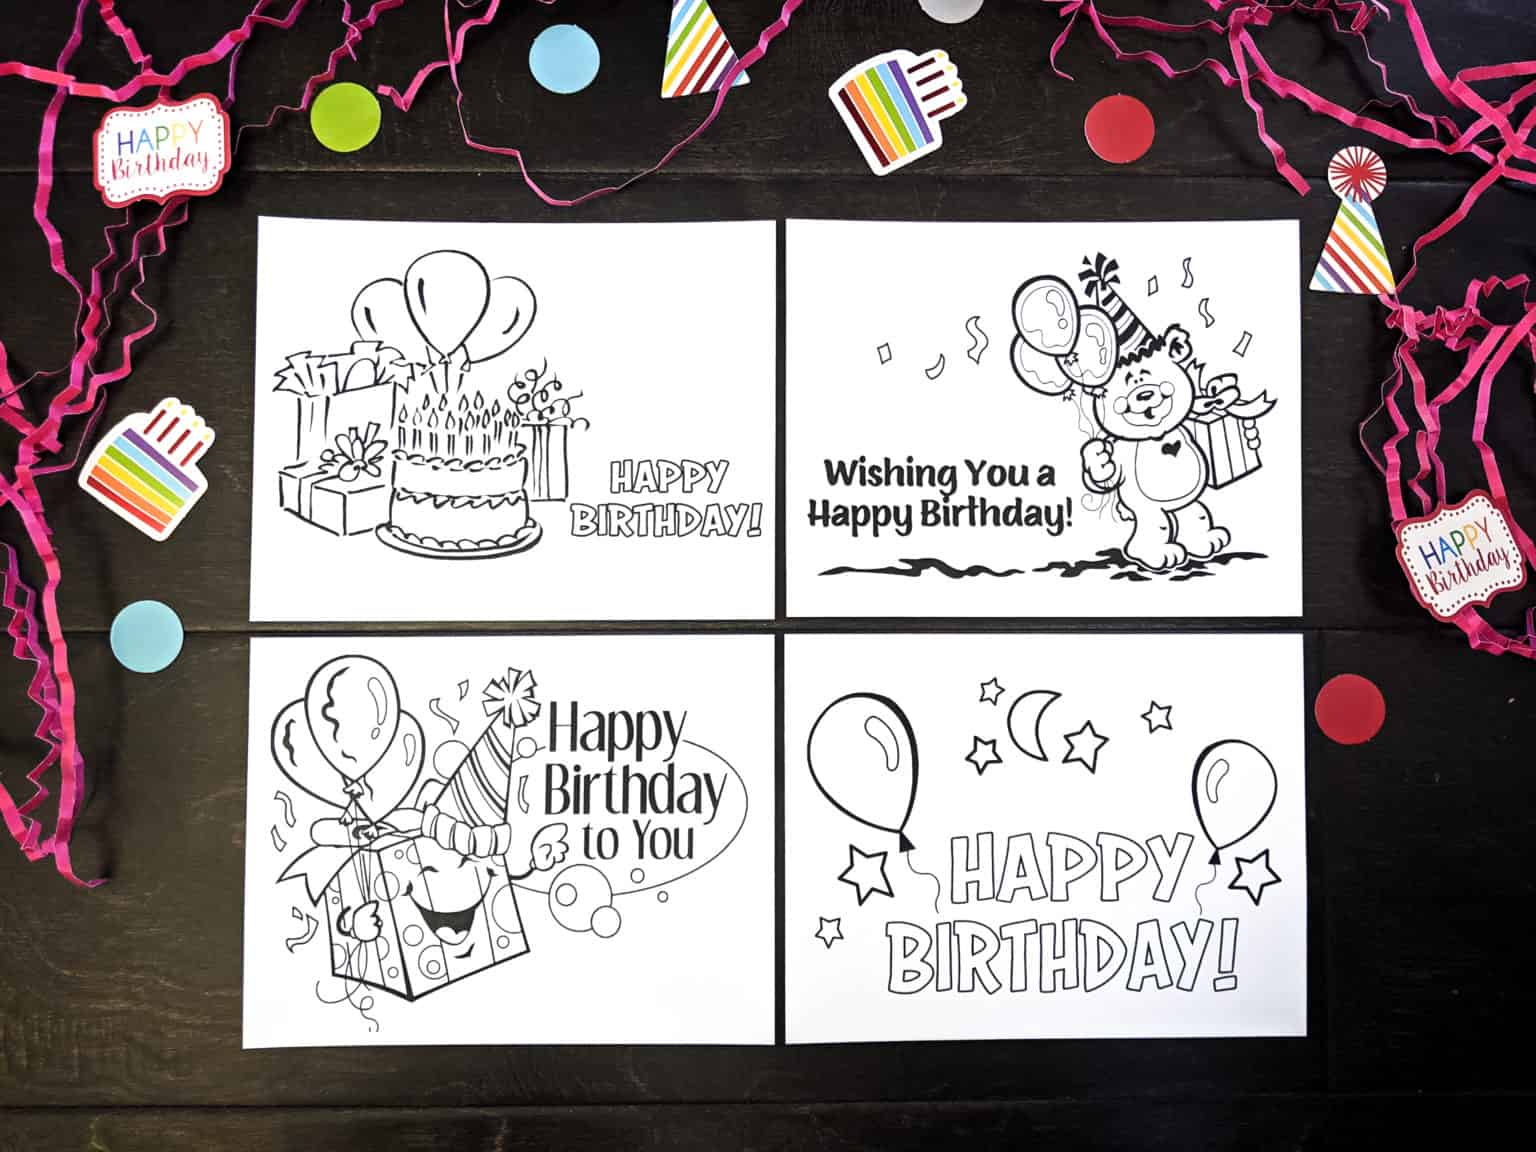 Free Birthday Cards | Children's Worship Bulletins Blog